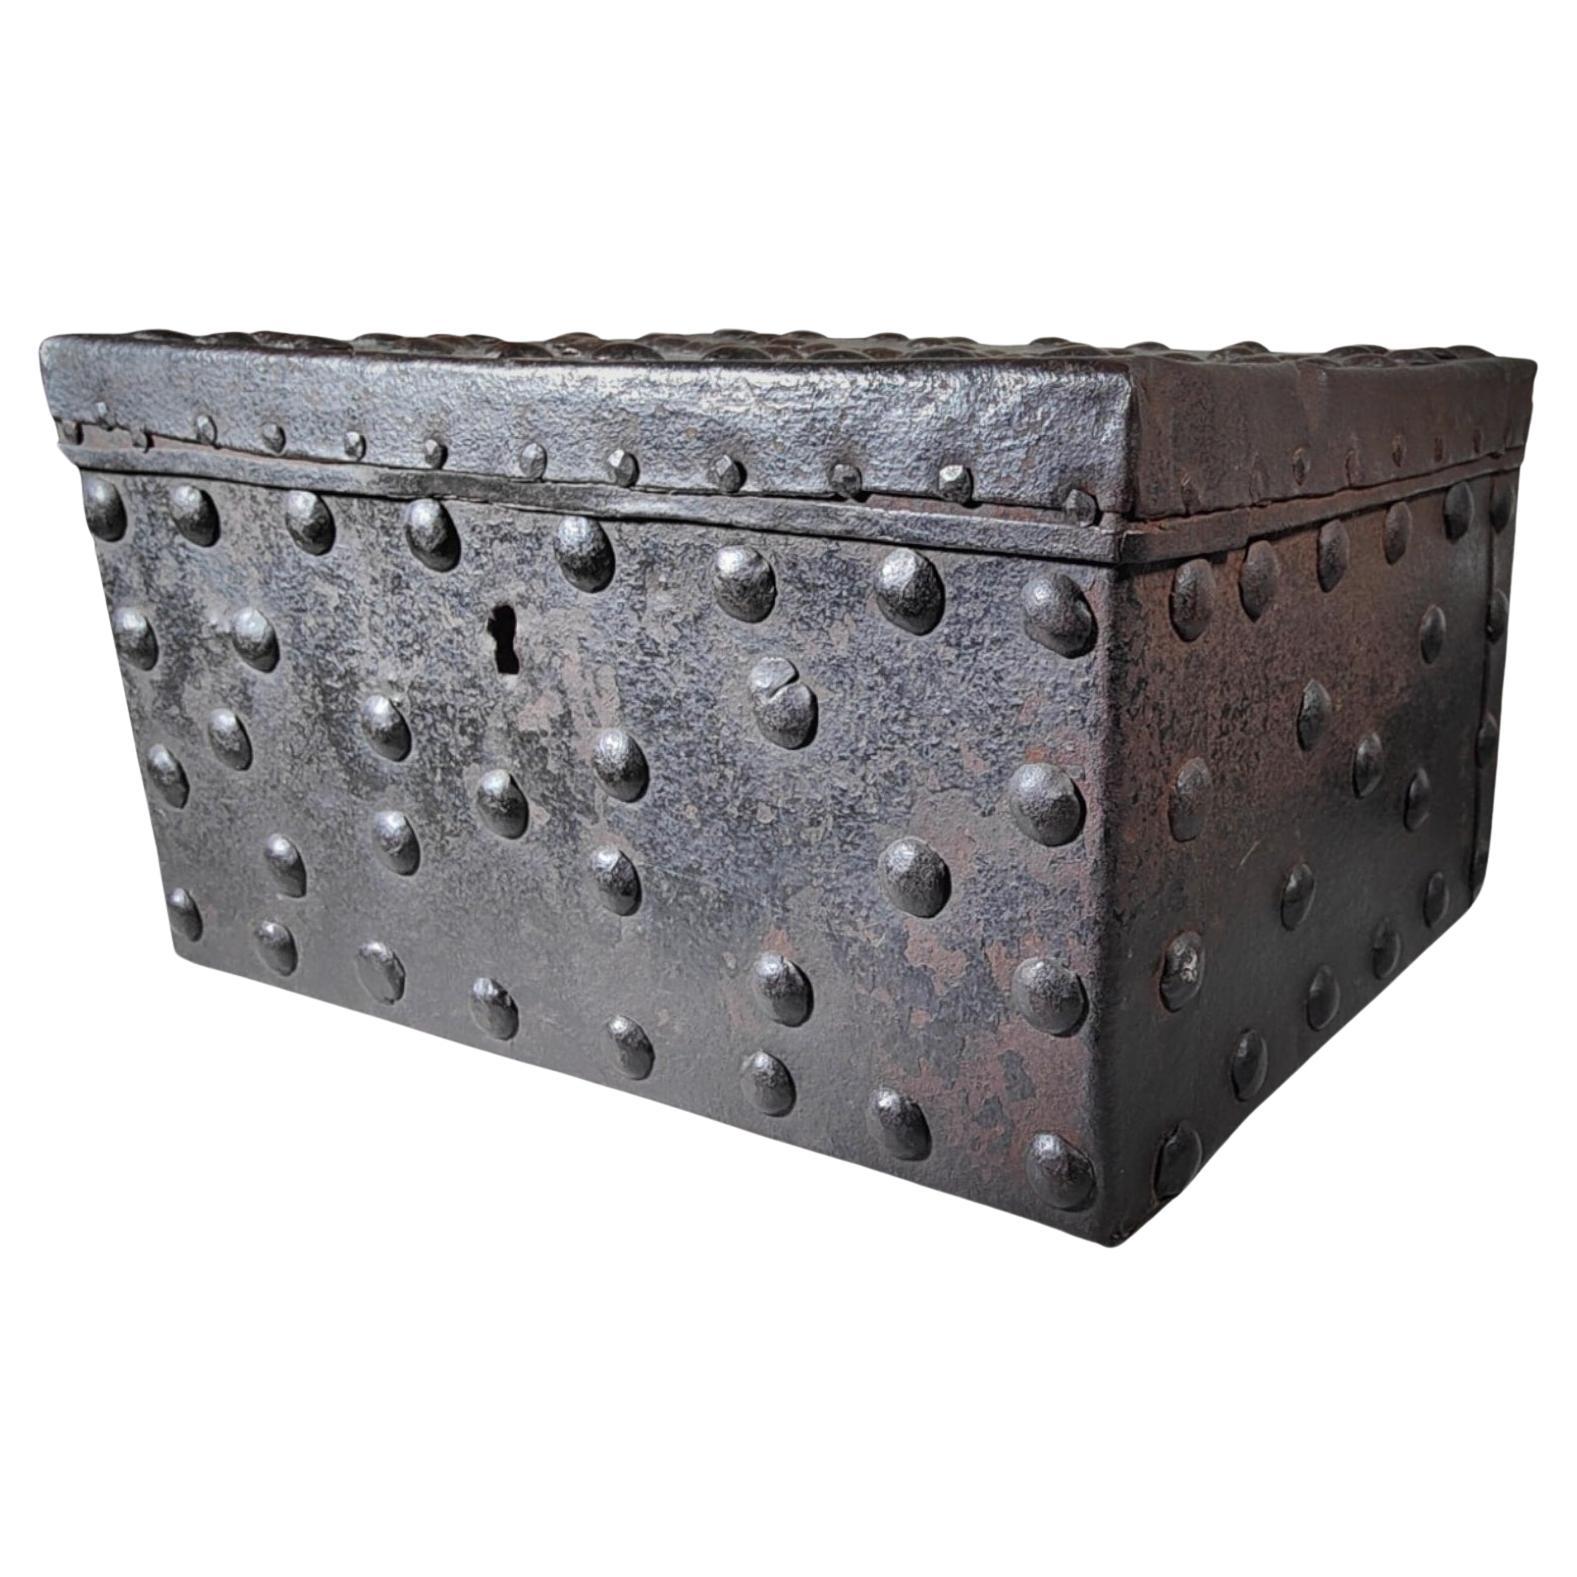 Wrought iron box with secret 18th century